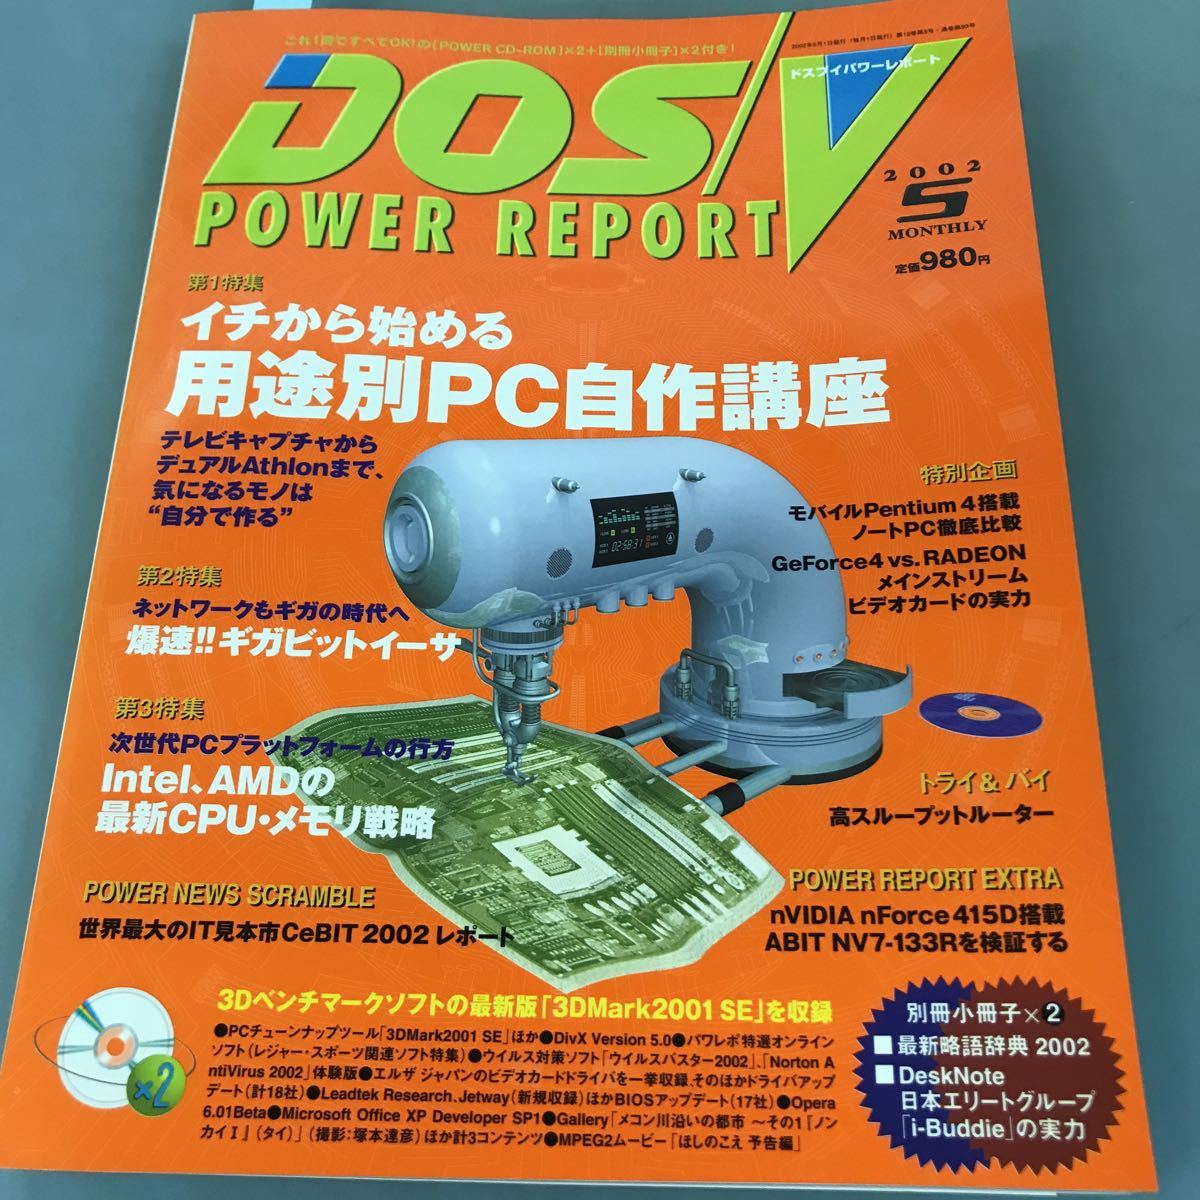 A07-088 DOS/V POWER REPORT 2002 5 MONTHLY 特集 イチから始める用途別PC自作講座爆速 小冊子 最新攻略語辞典2002 欠品